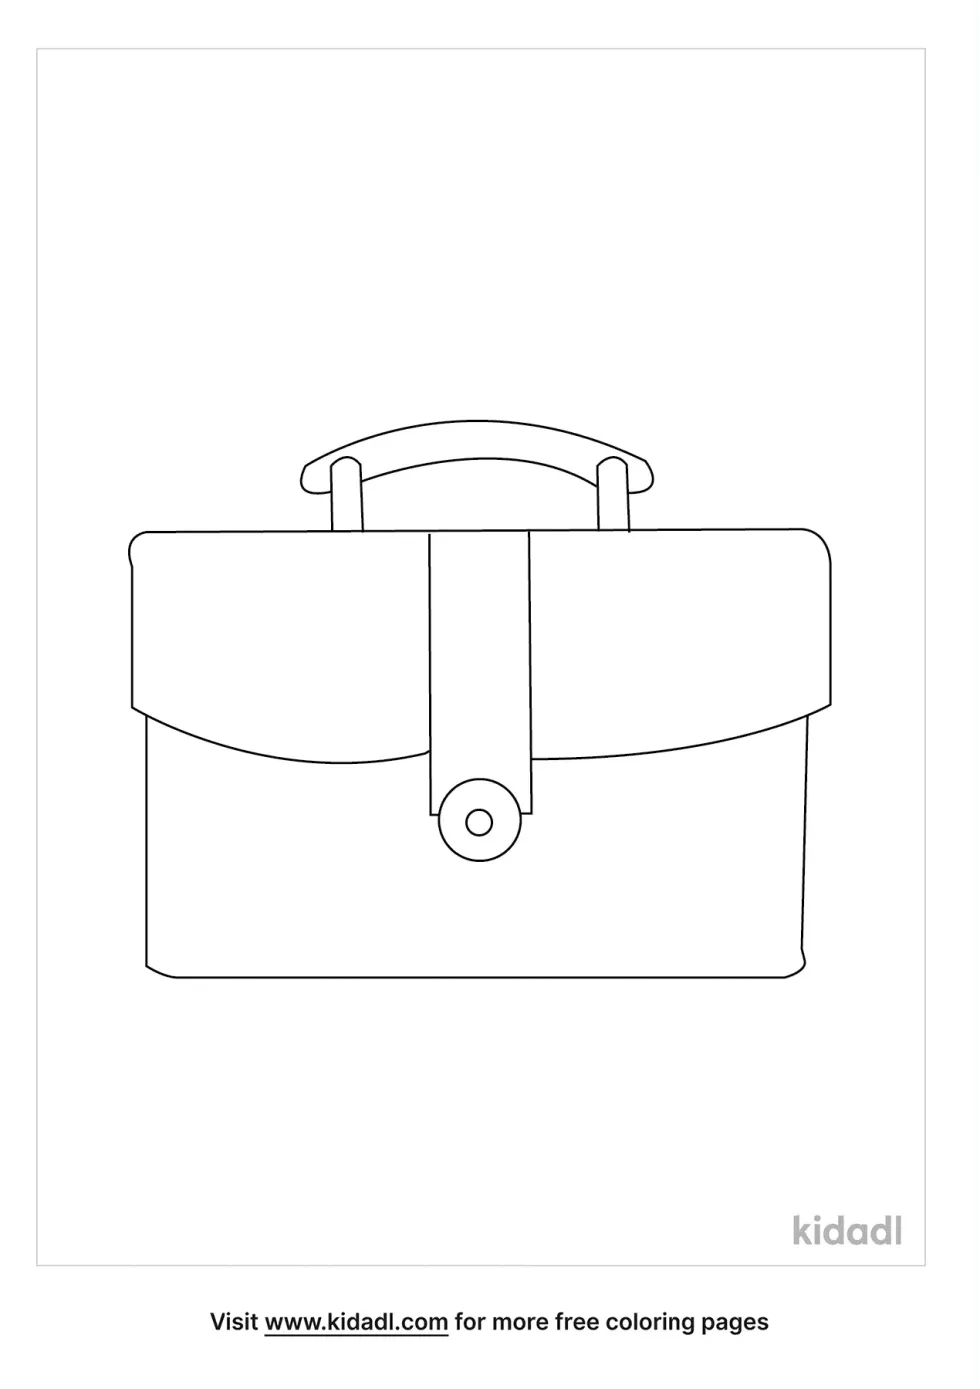 An Attache/briefcase